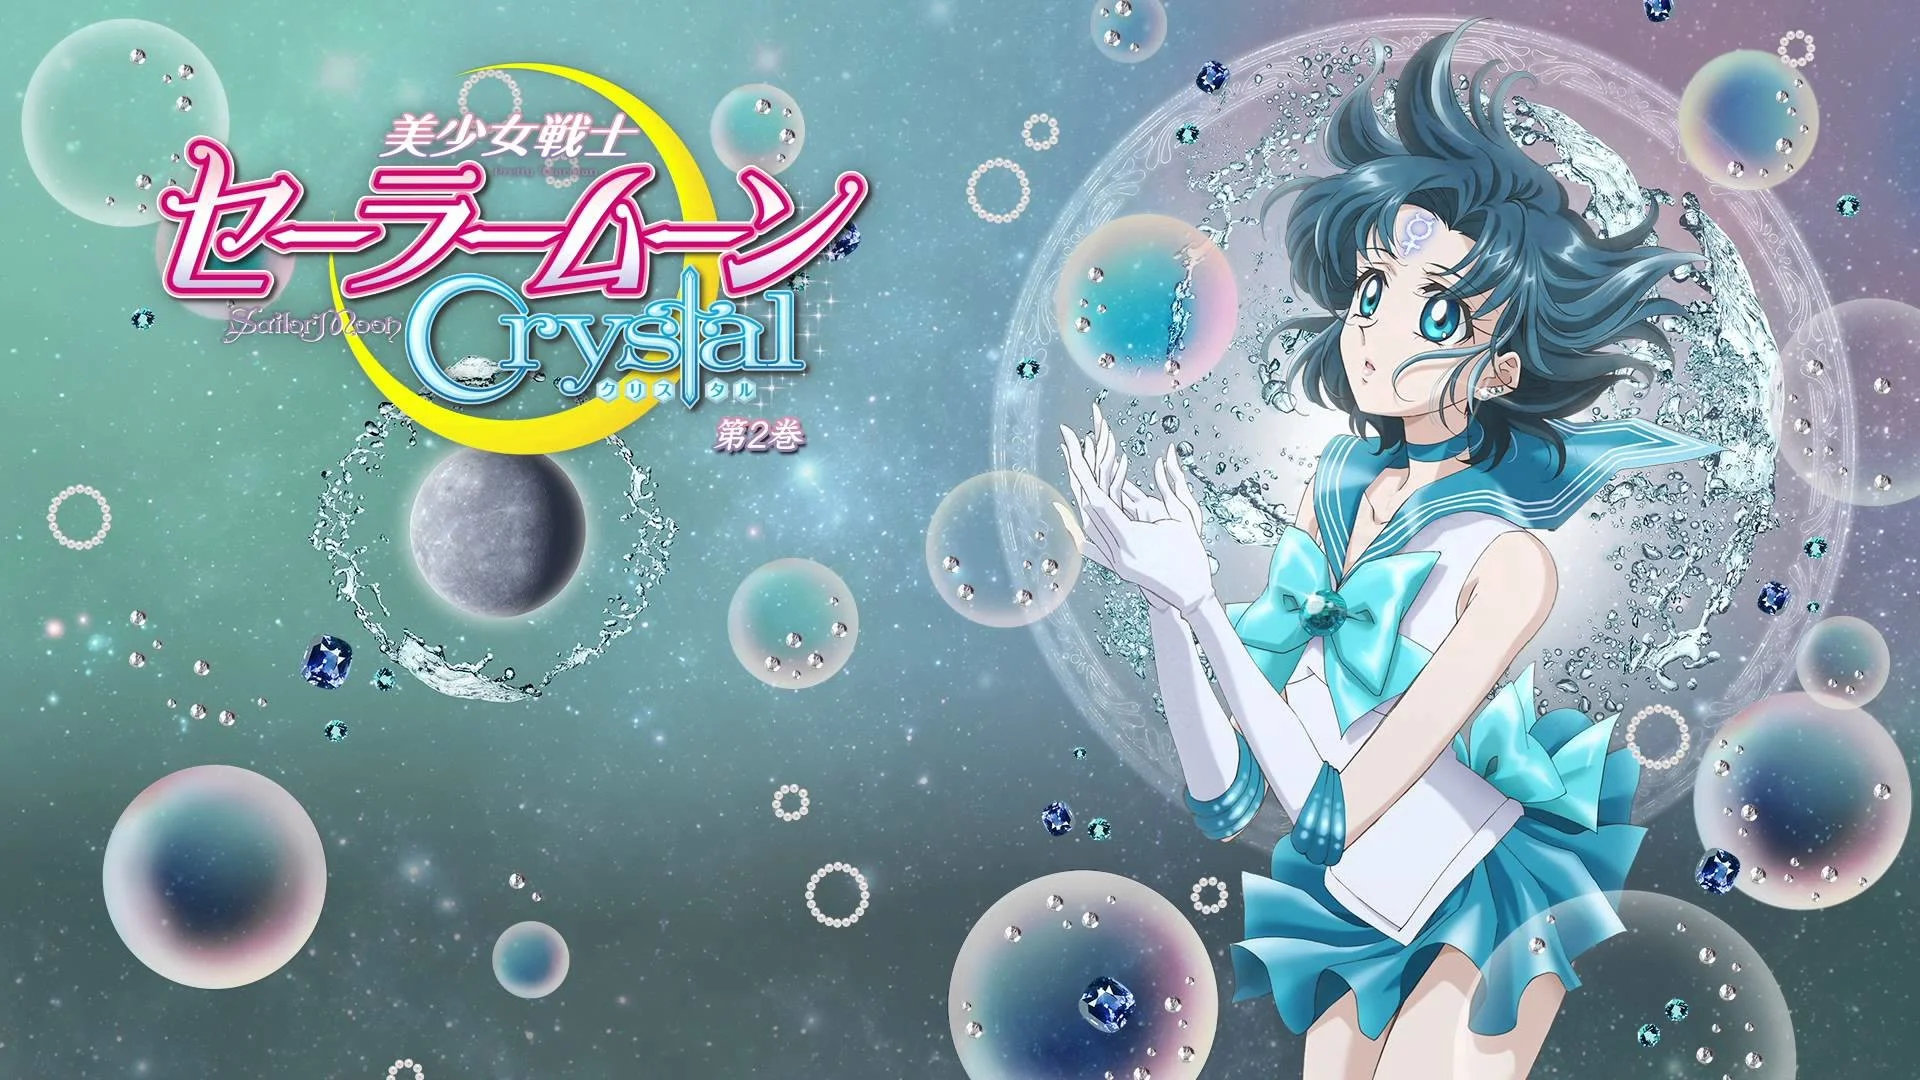 Sailor Moon Desktop Wallpaper by Yumpop82 on DeviantArt